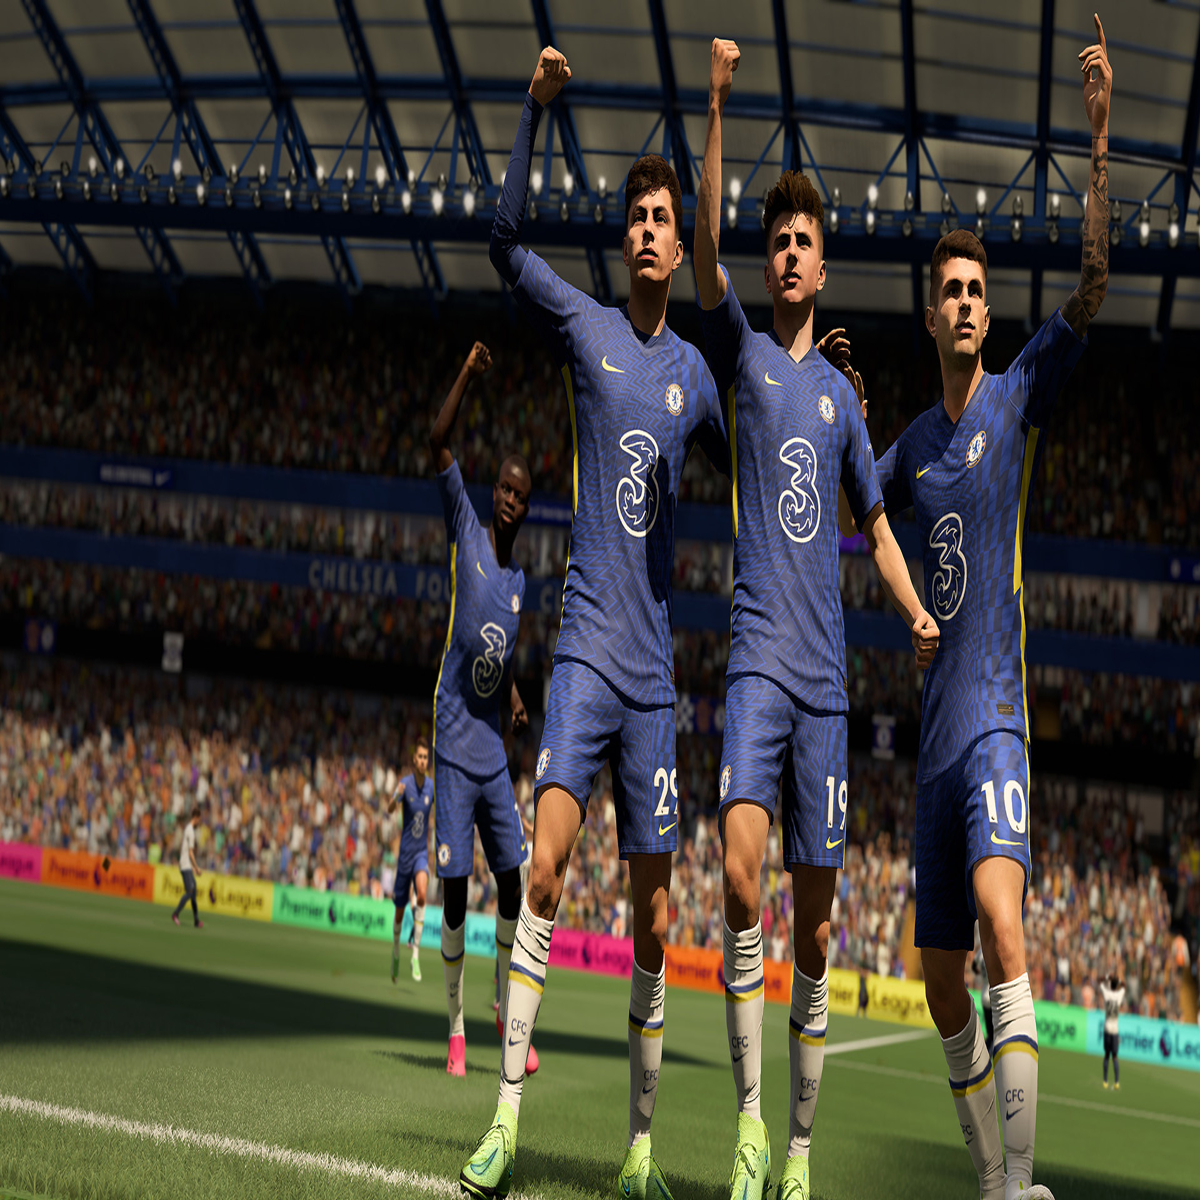 FIFA 22 Cross-Play Testing Soon For Online Seasons and Friendlies